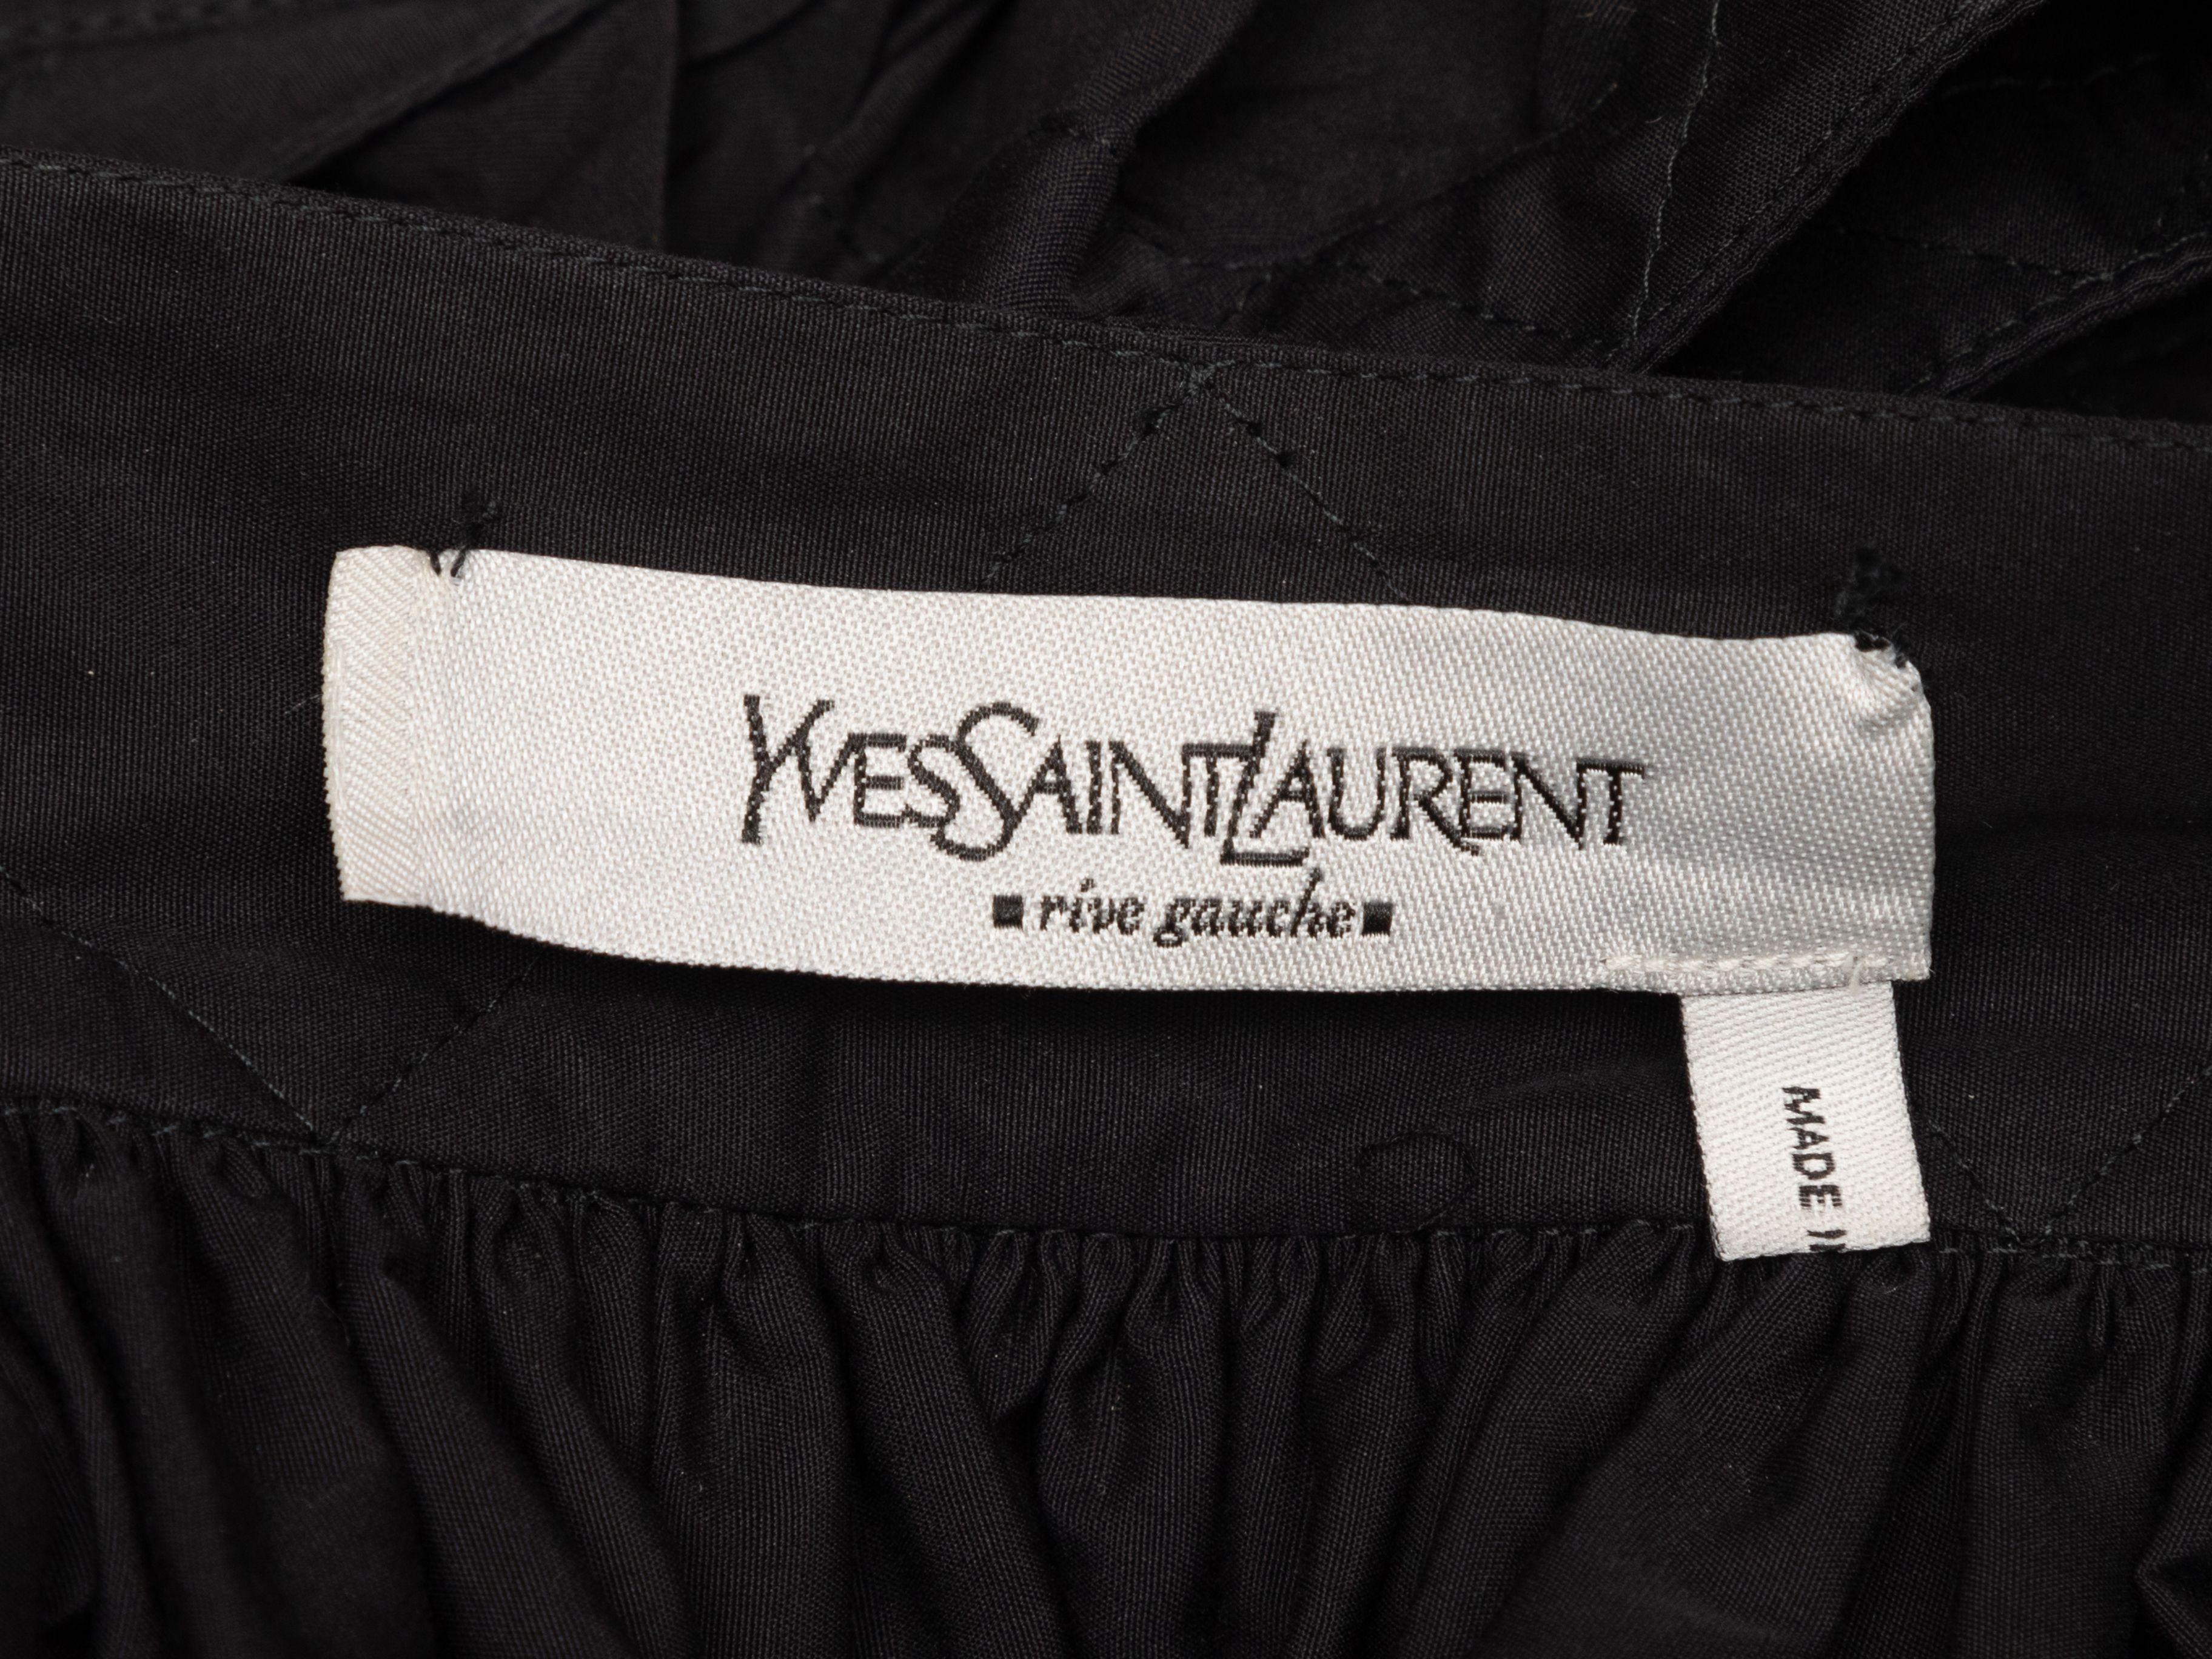 Product Details: Black cotton halter midi dress by Yves Saint Laurent. V-neck. Ruffle trim at neckline. Sash tie at waist. 26